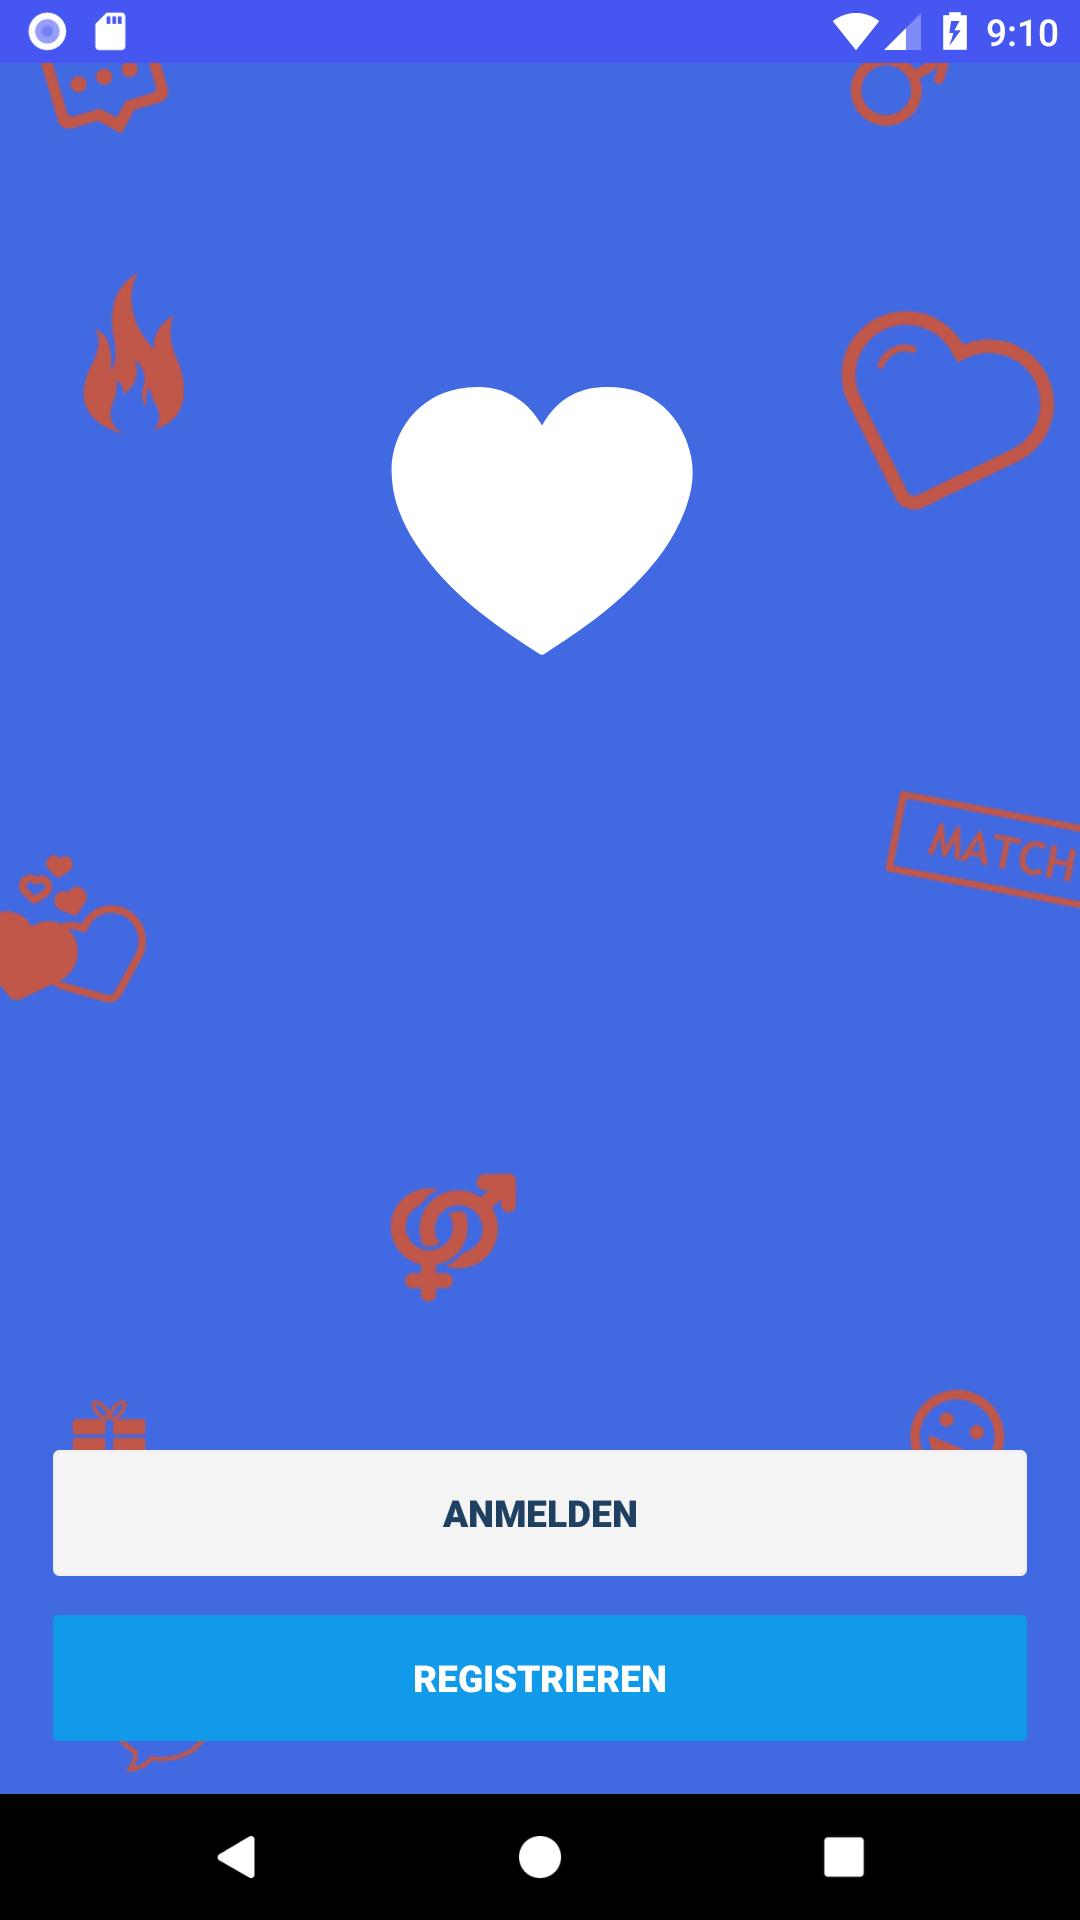 Kostenlose christian dating apps für android